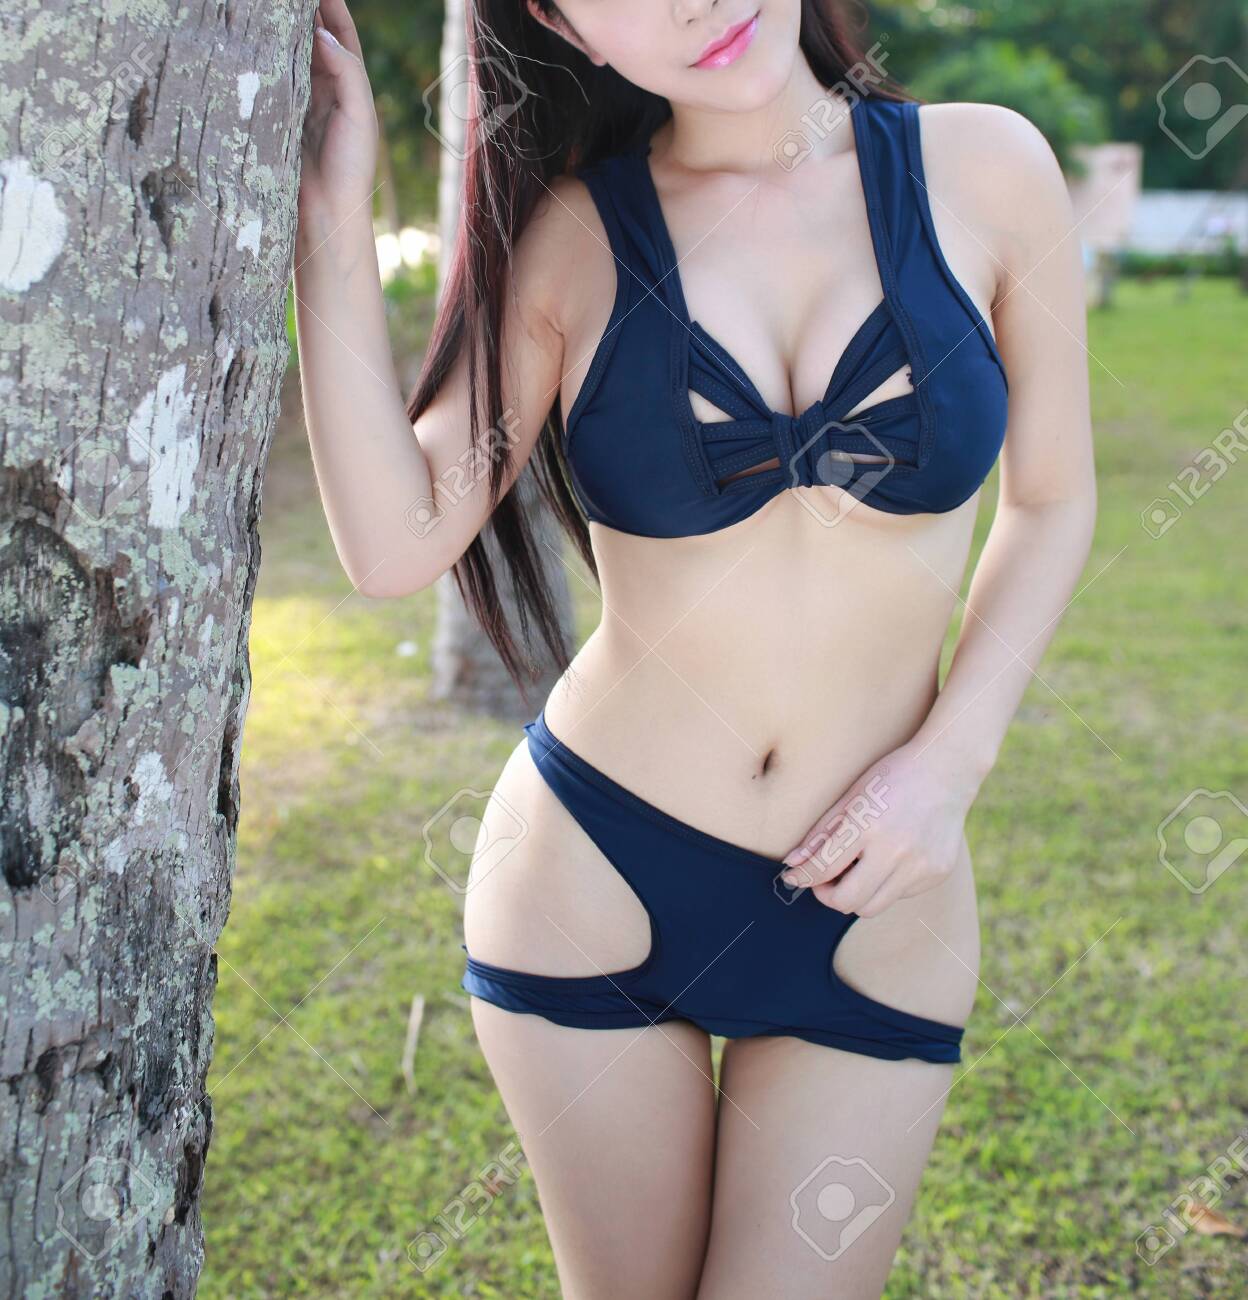 craig storer share hot sexy girls with big boobs photos